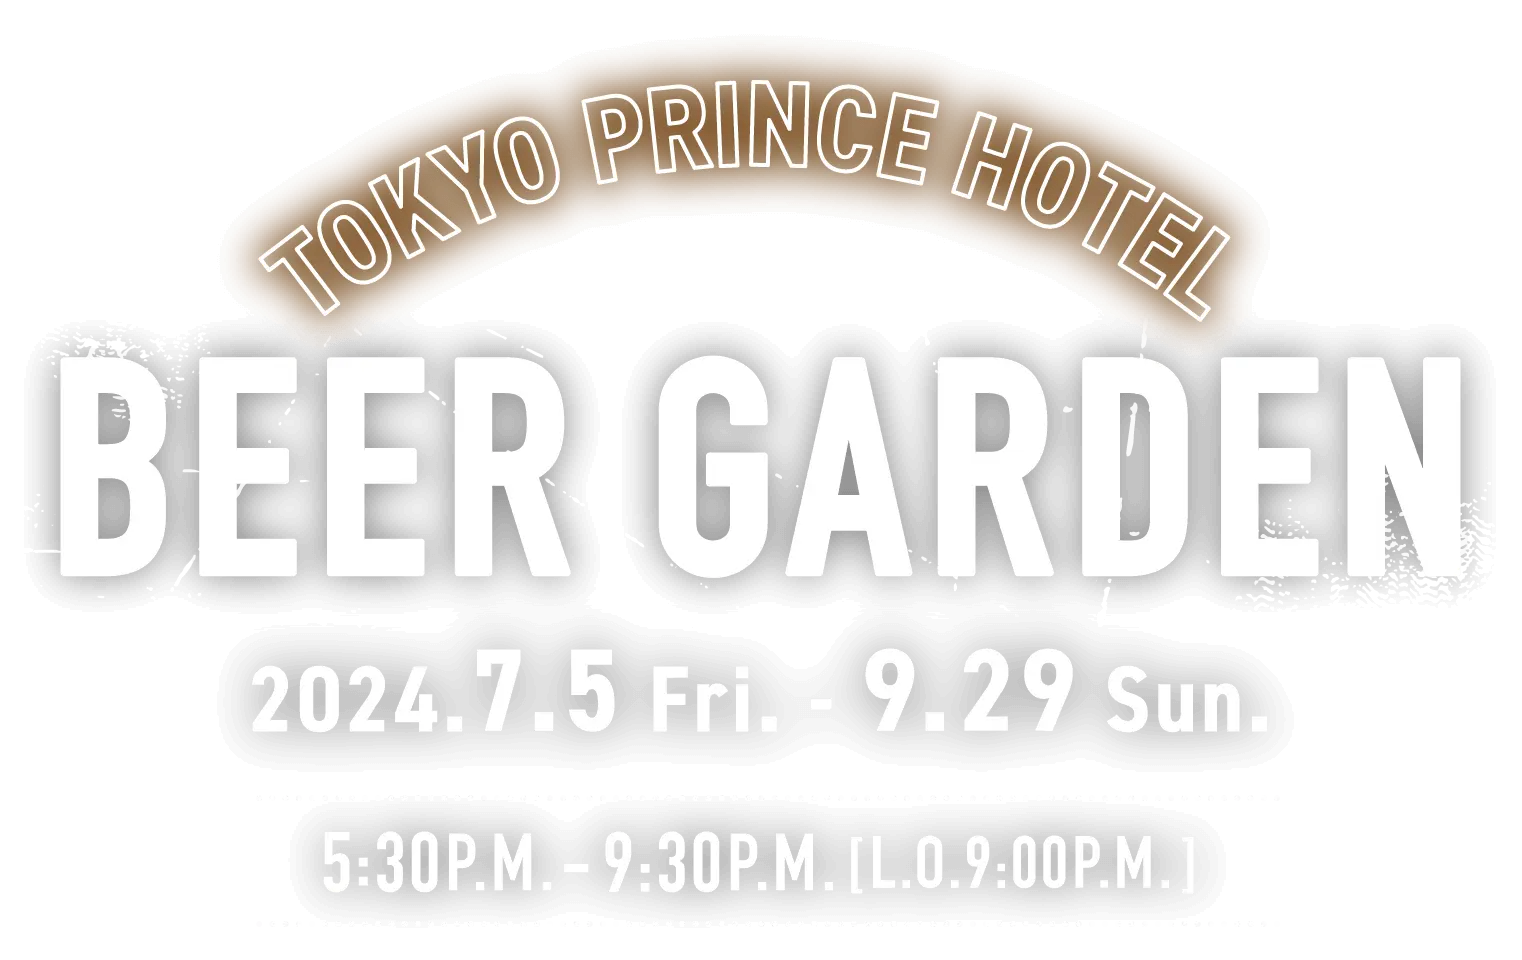 TOKYO PRINCE HOTEL BEER GARDEN 2024,7.5 Fri. - 9.29 Sun. 5:30P.M. - 9:30P.M.[L.O.9.00P.M.]